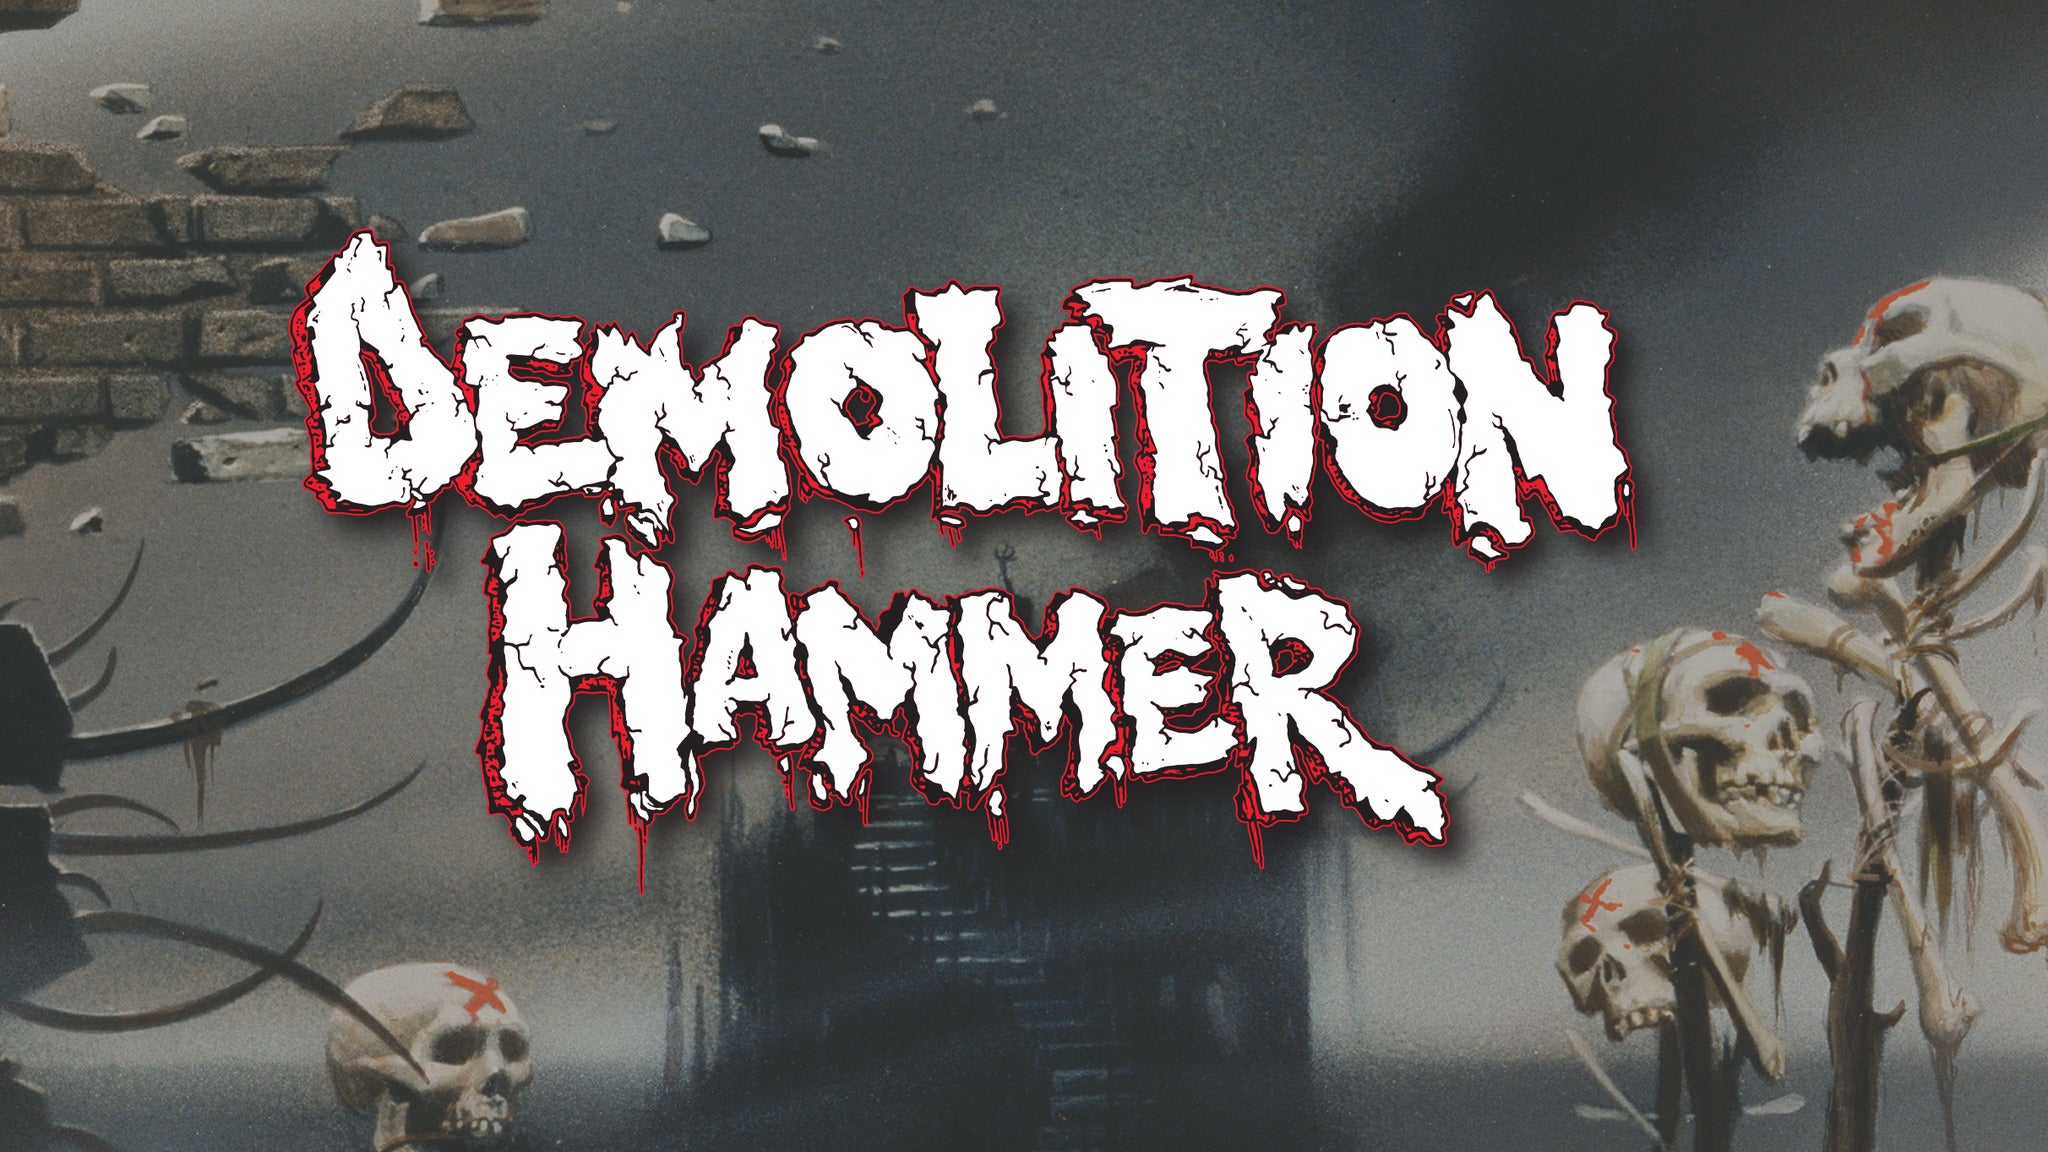 Demolition Hammer in New York promo photo for Live Nation Mobile presale offer code